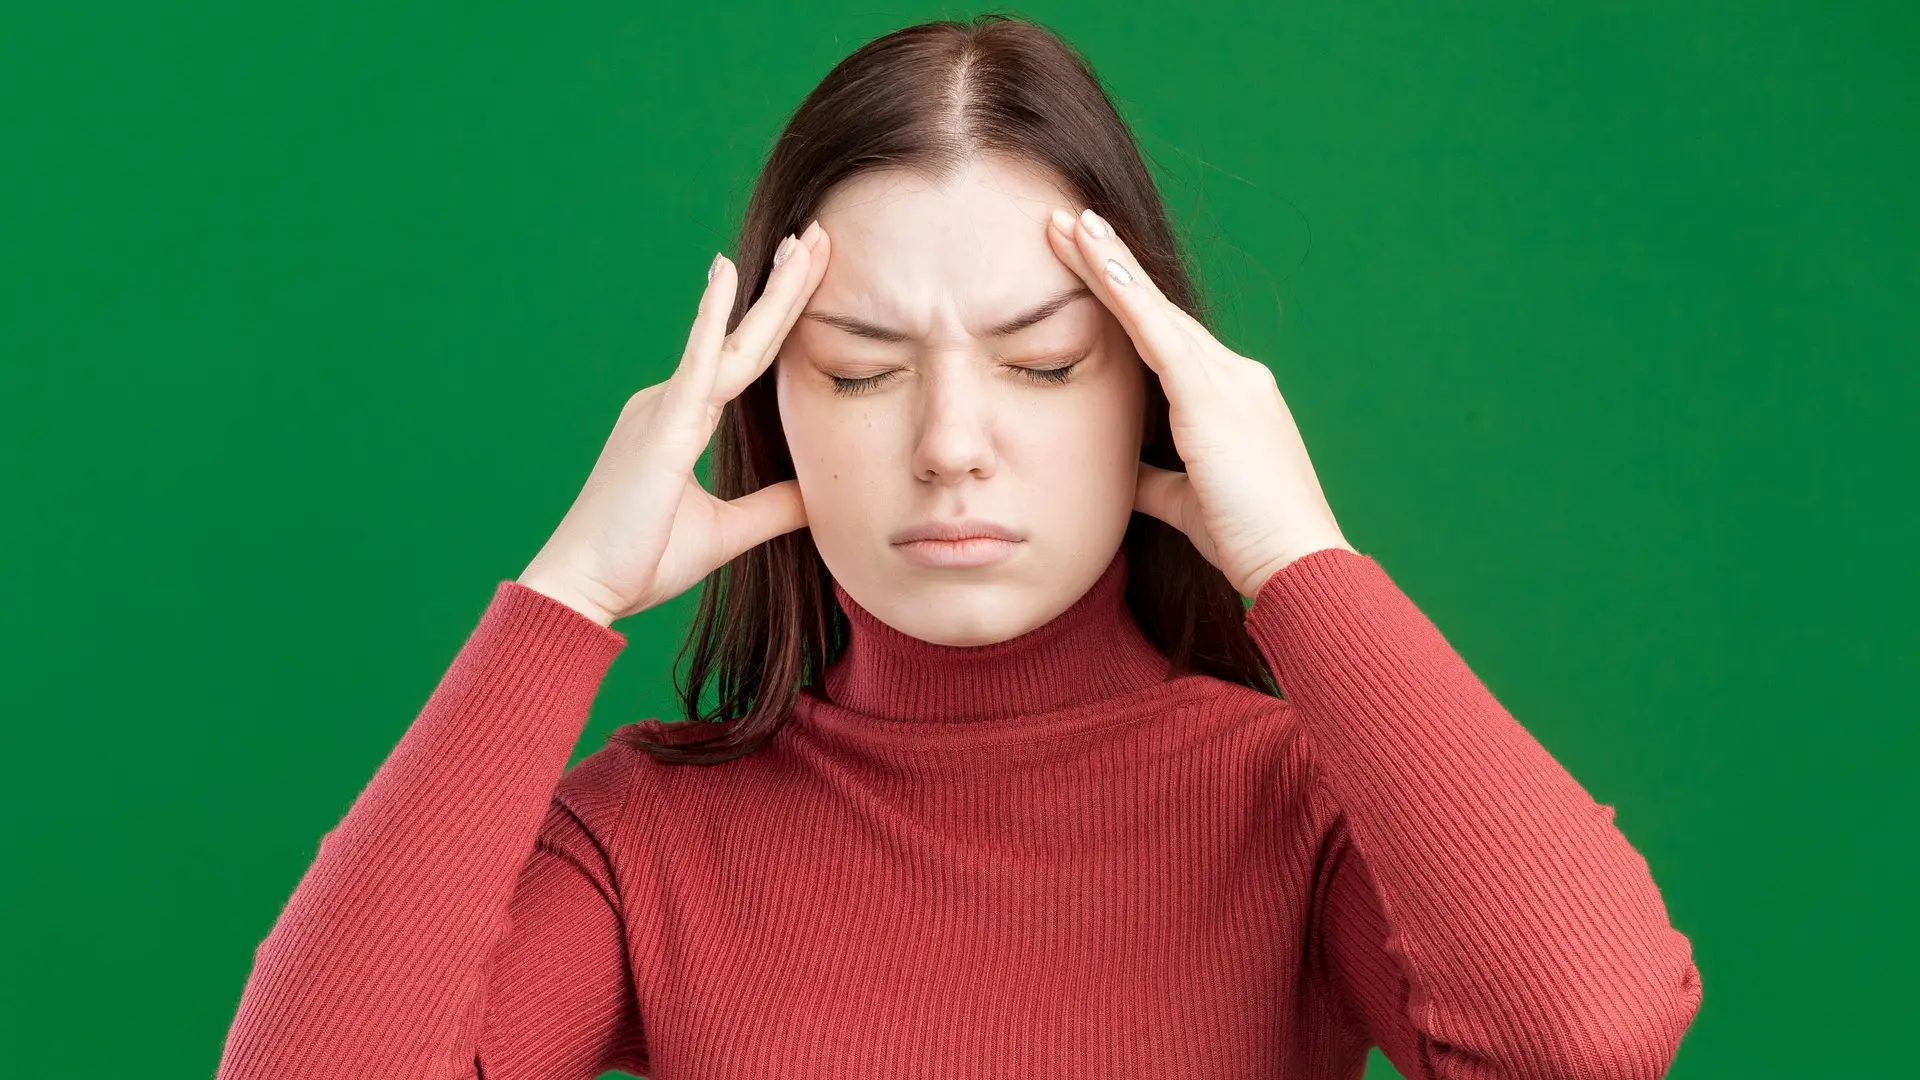 glavobolja, migrena, bol žena pixabay-6617bb20e3b24.webp